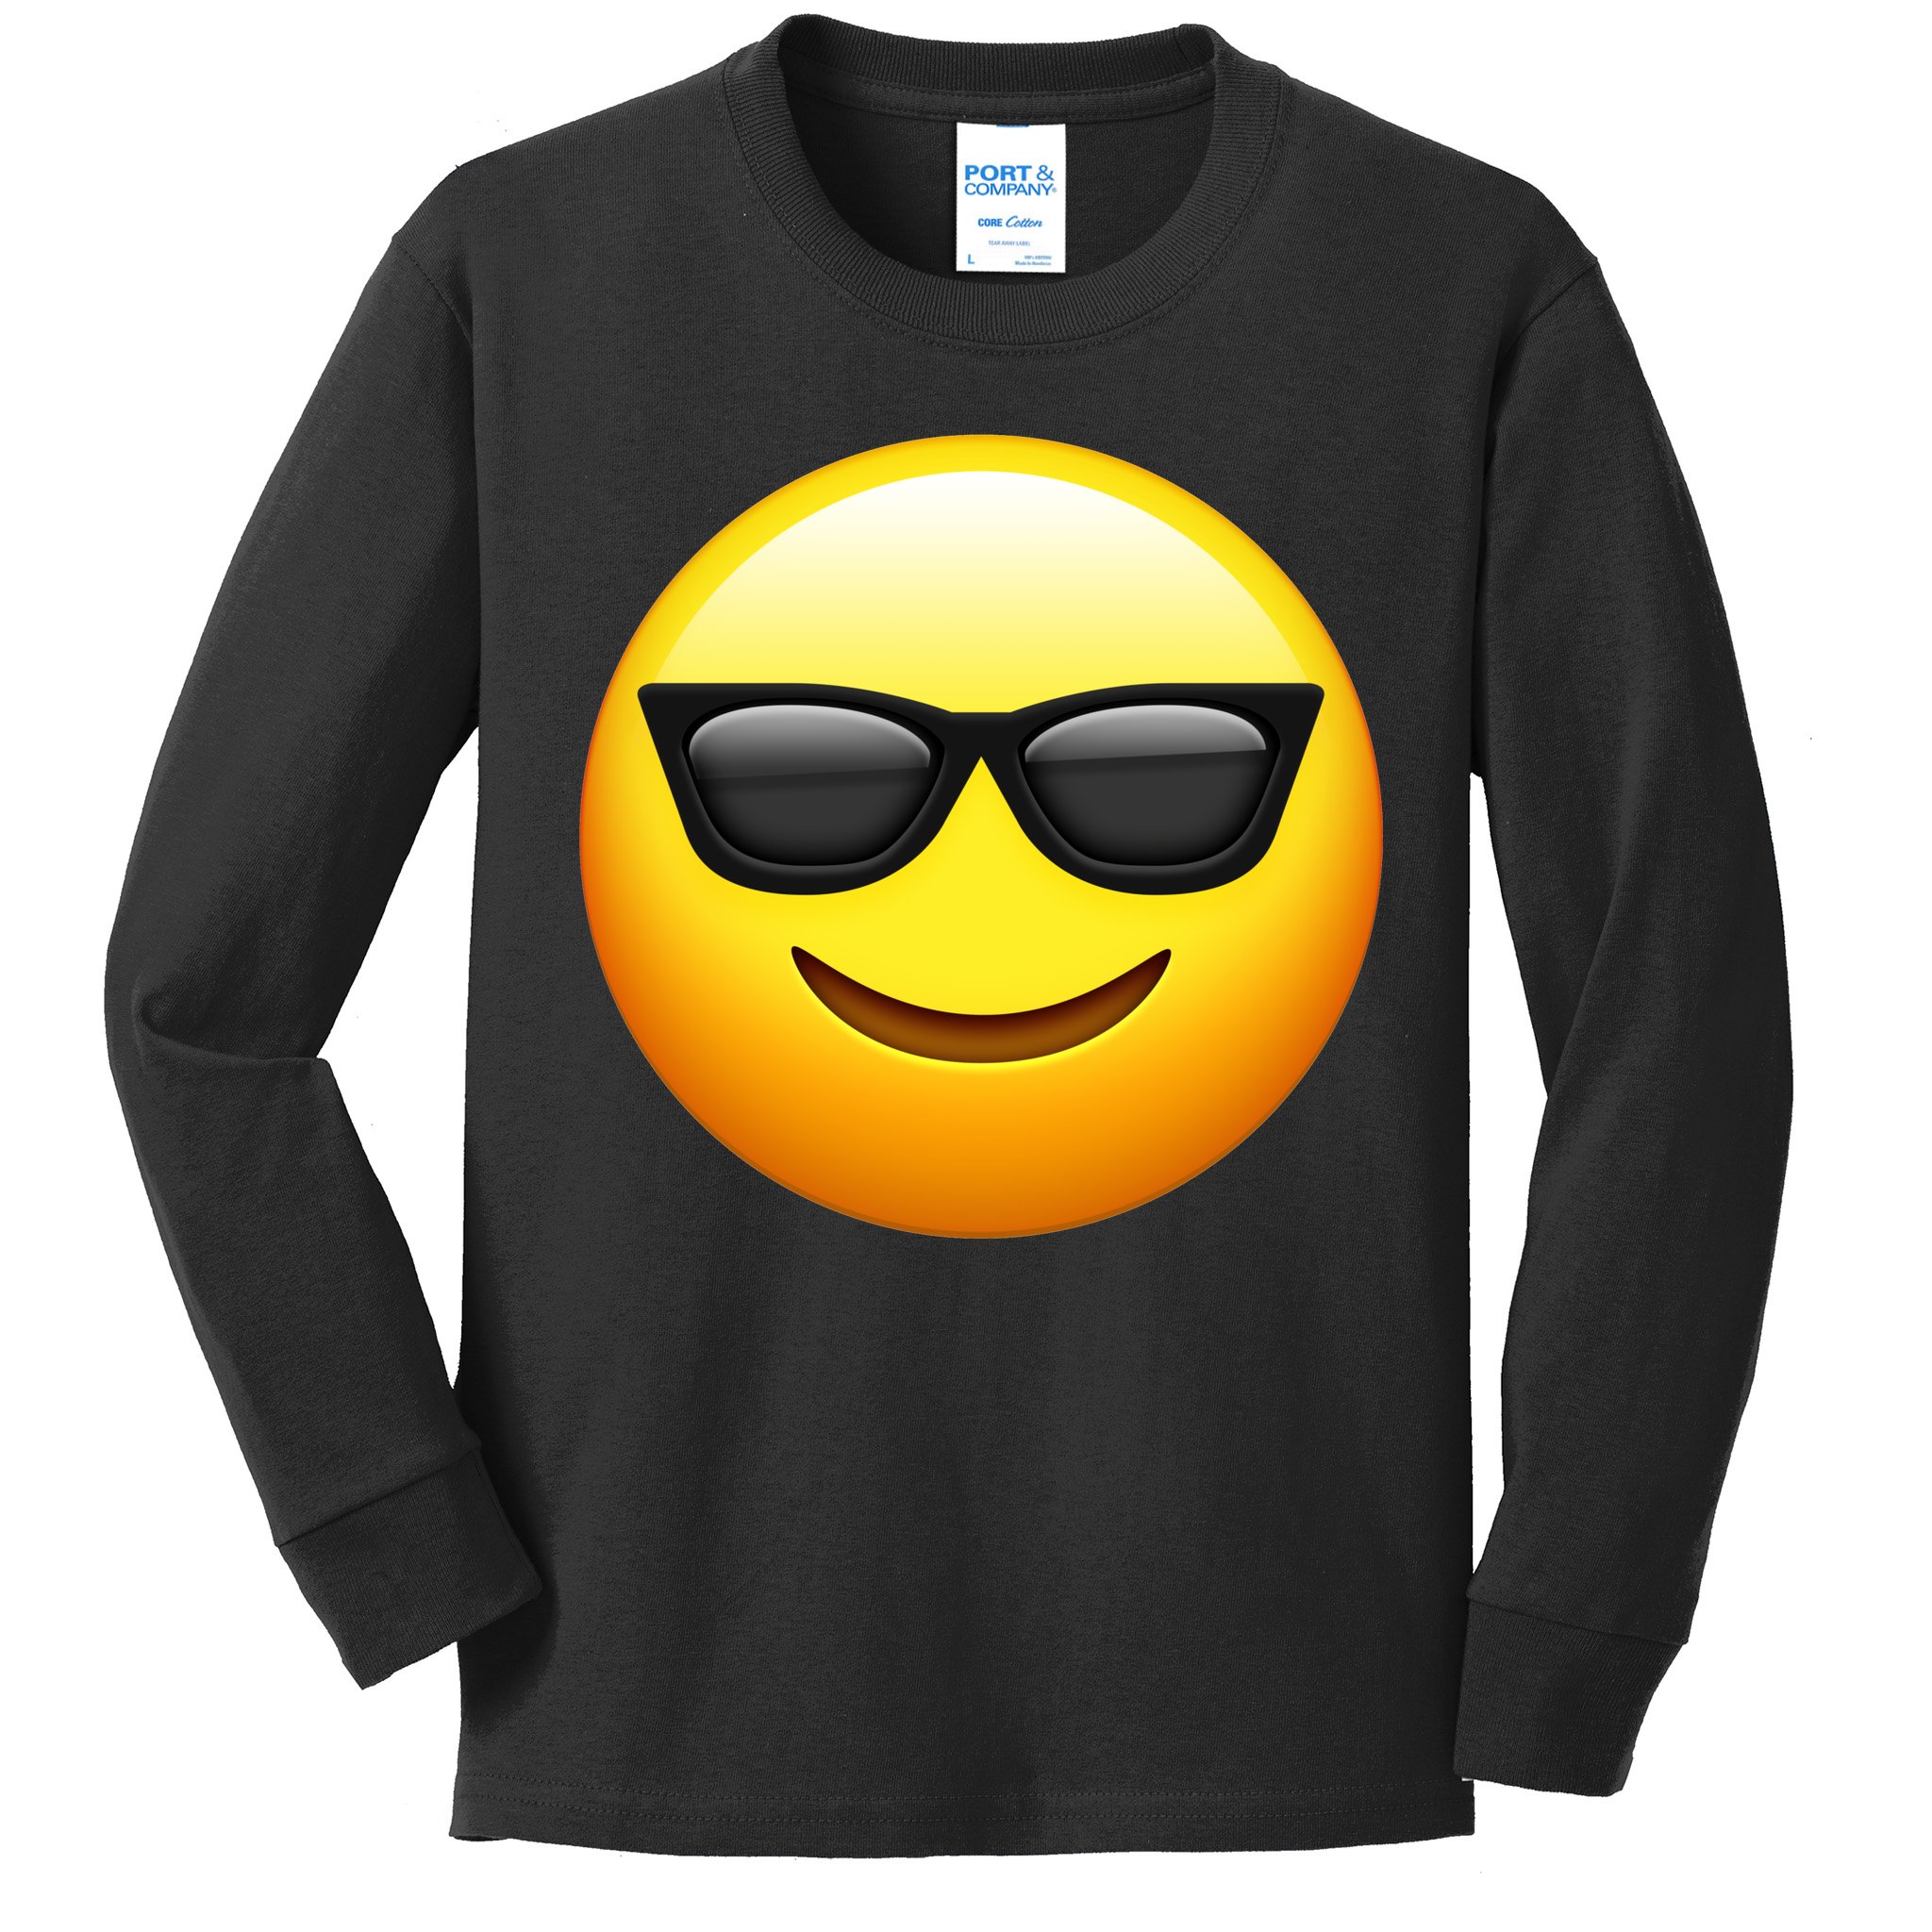 sunglasses emoji shirt